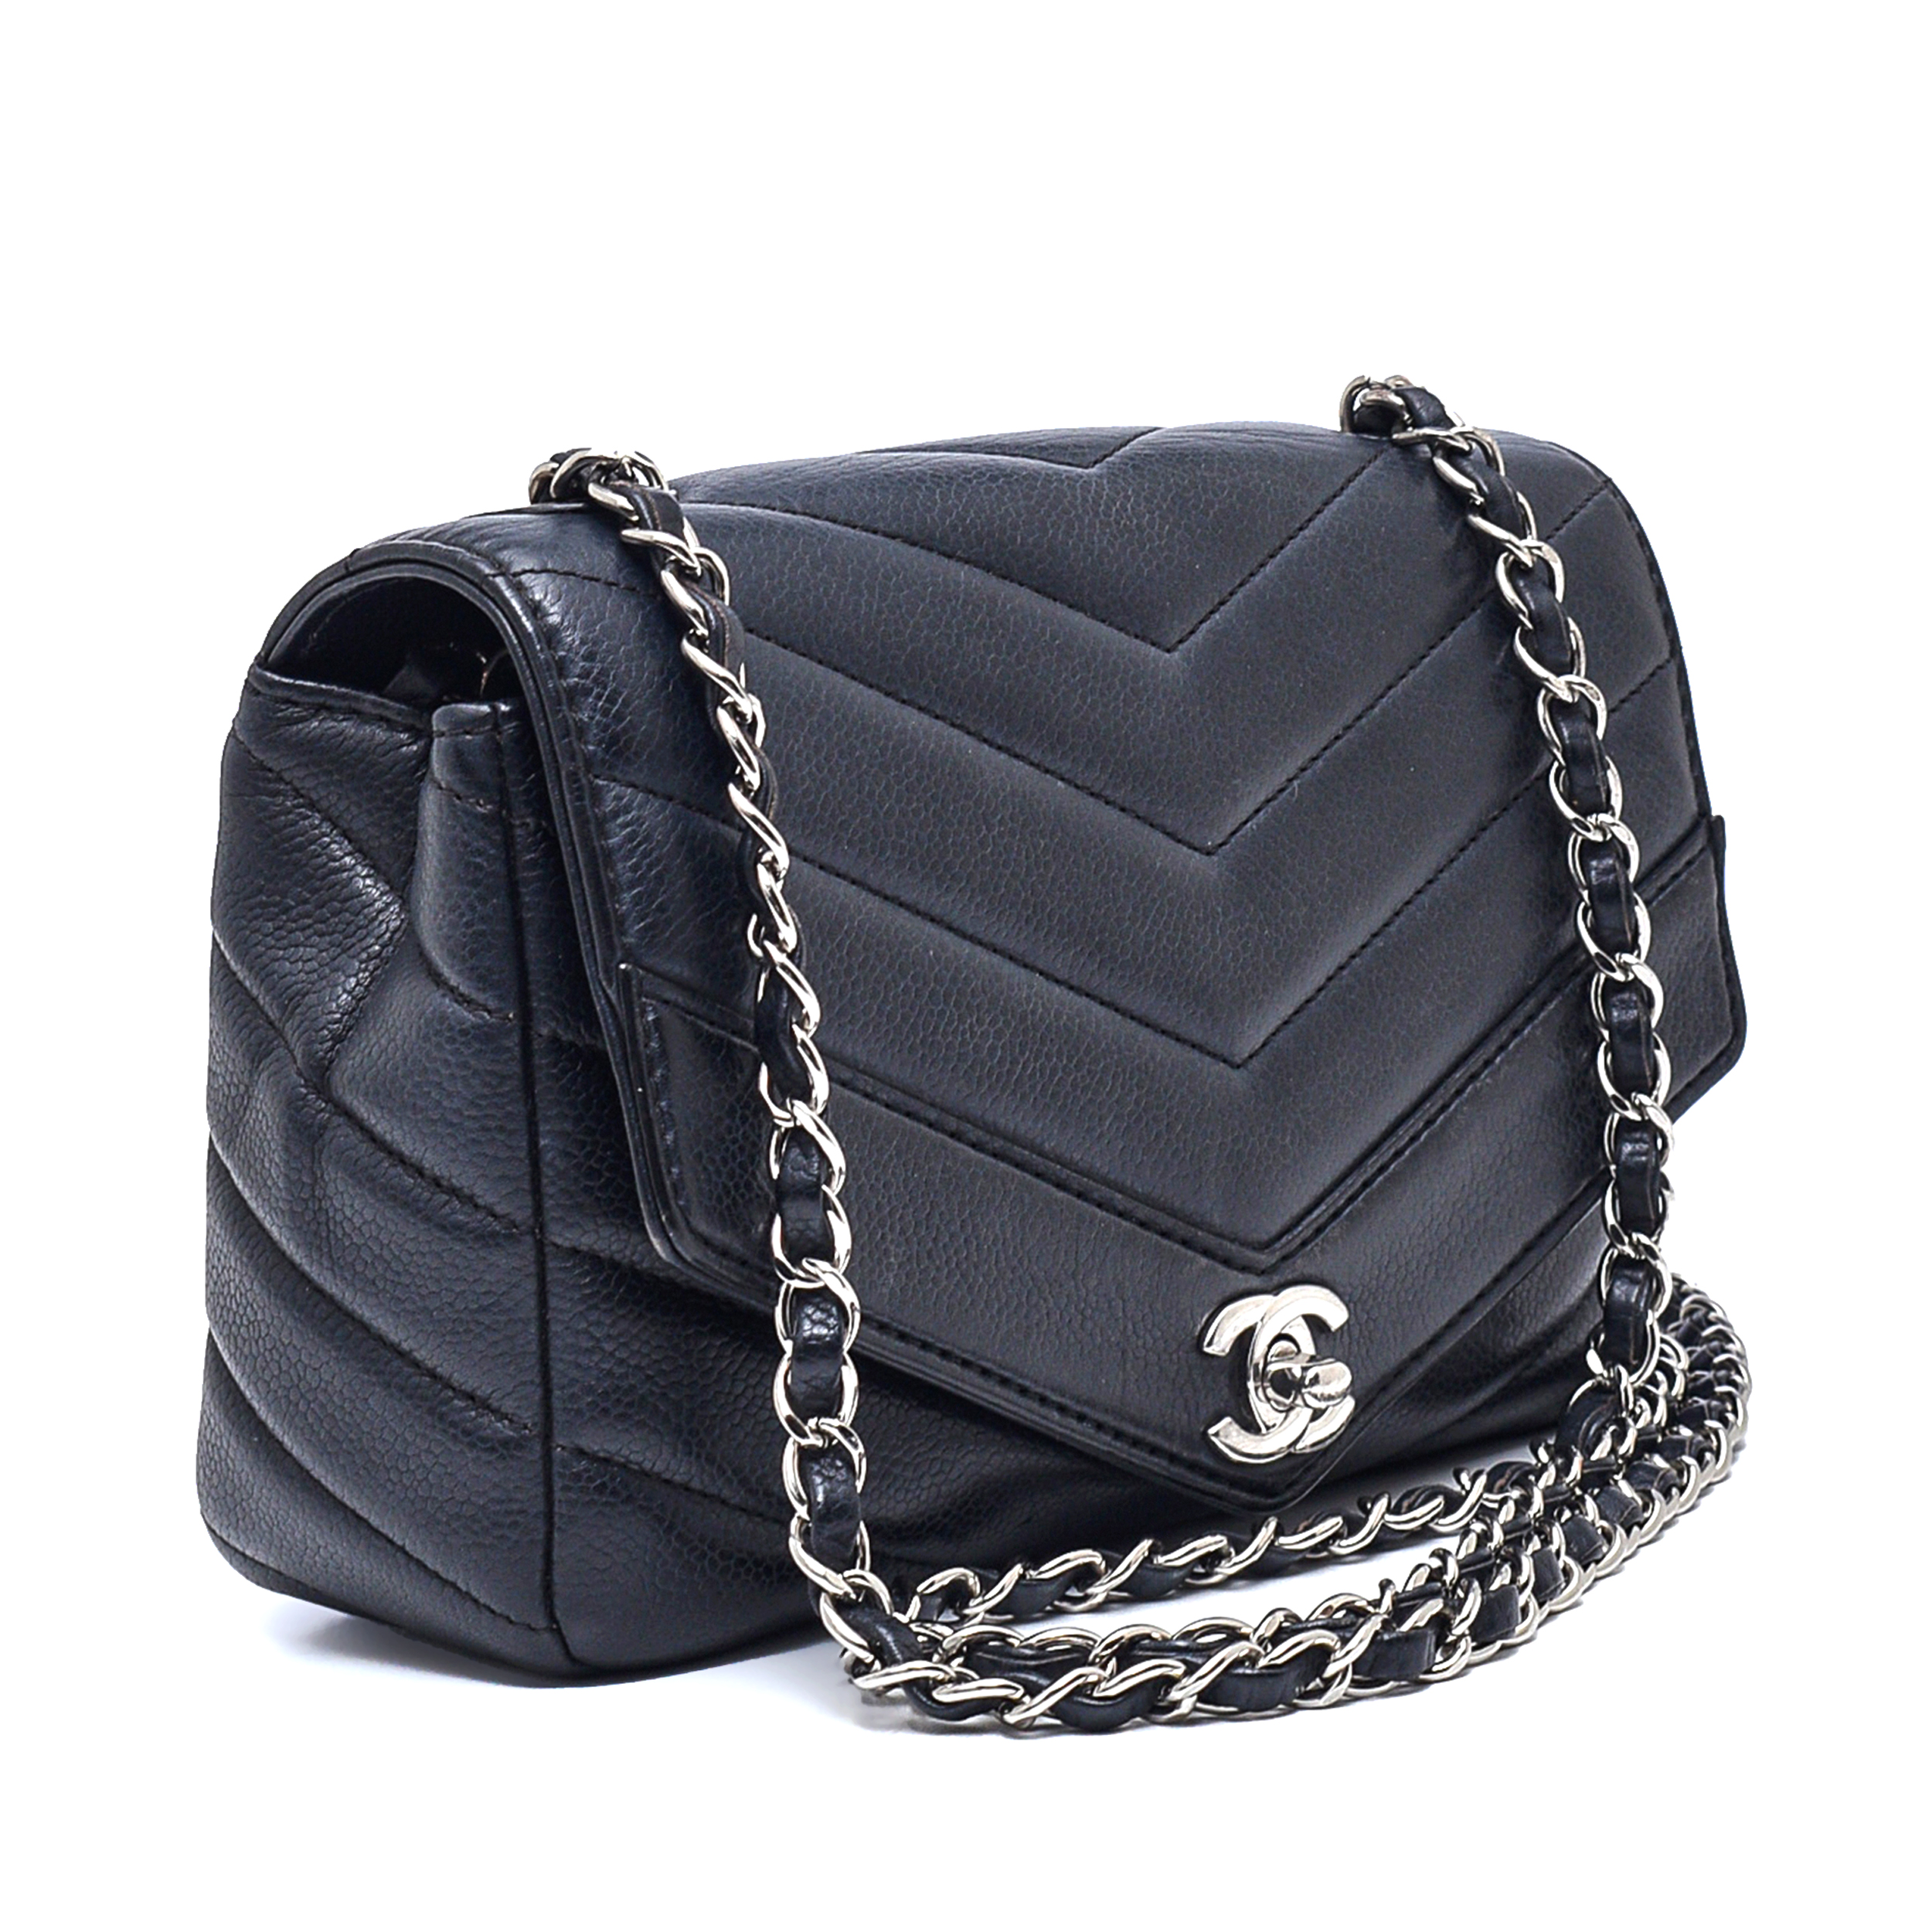 Chanel - Dark Navy Blue Caviar Chevron Leather Square Flap Bag